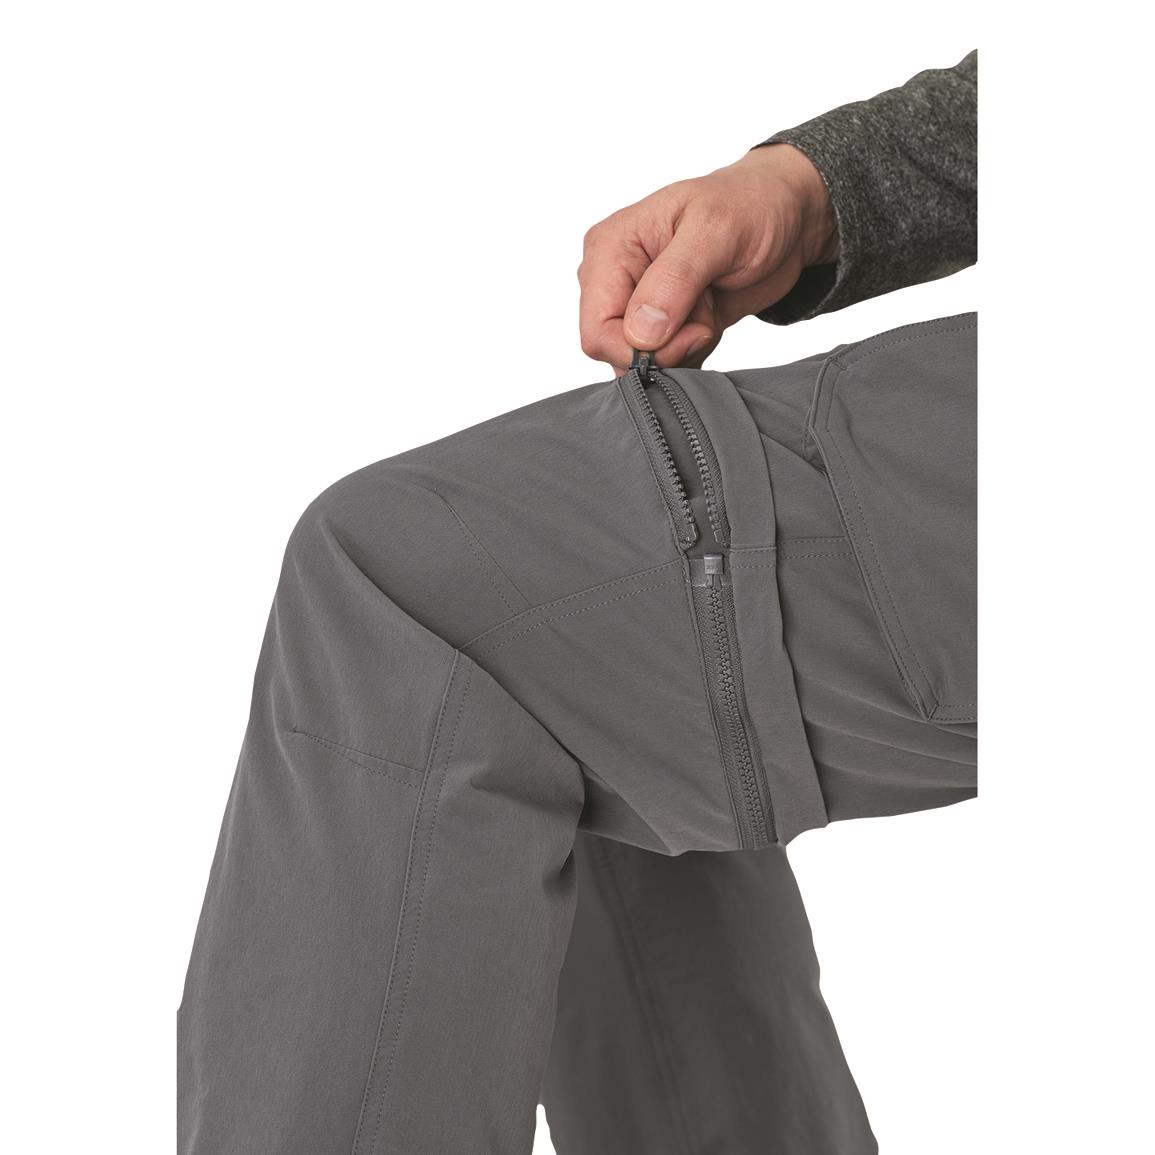 Condor Paladin Tactical Pants - 729916, Jeans & Pants at Sportsman's Guide